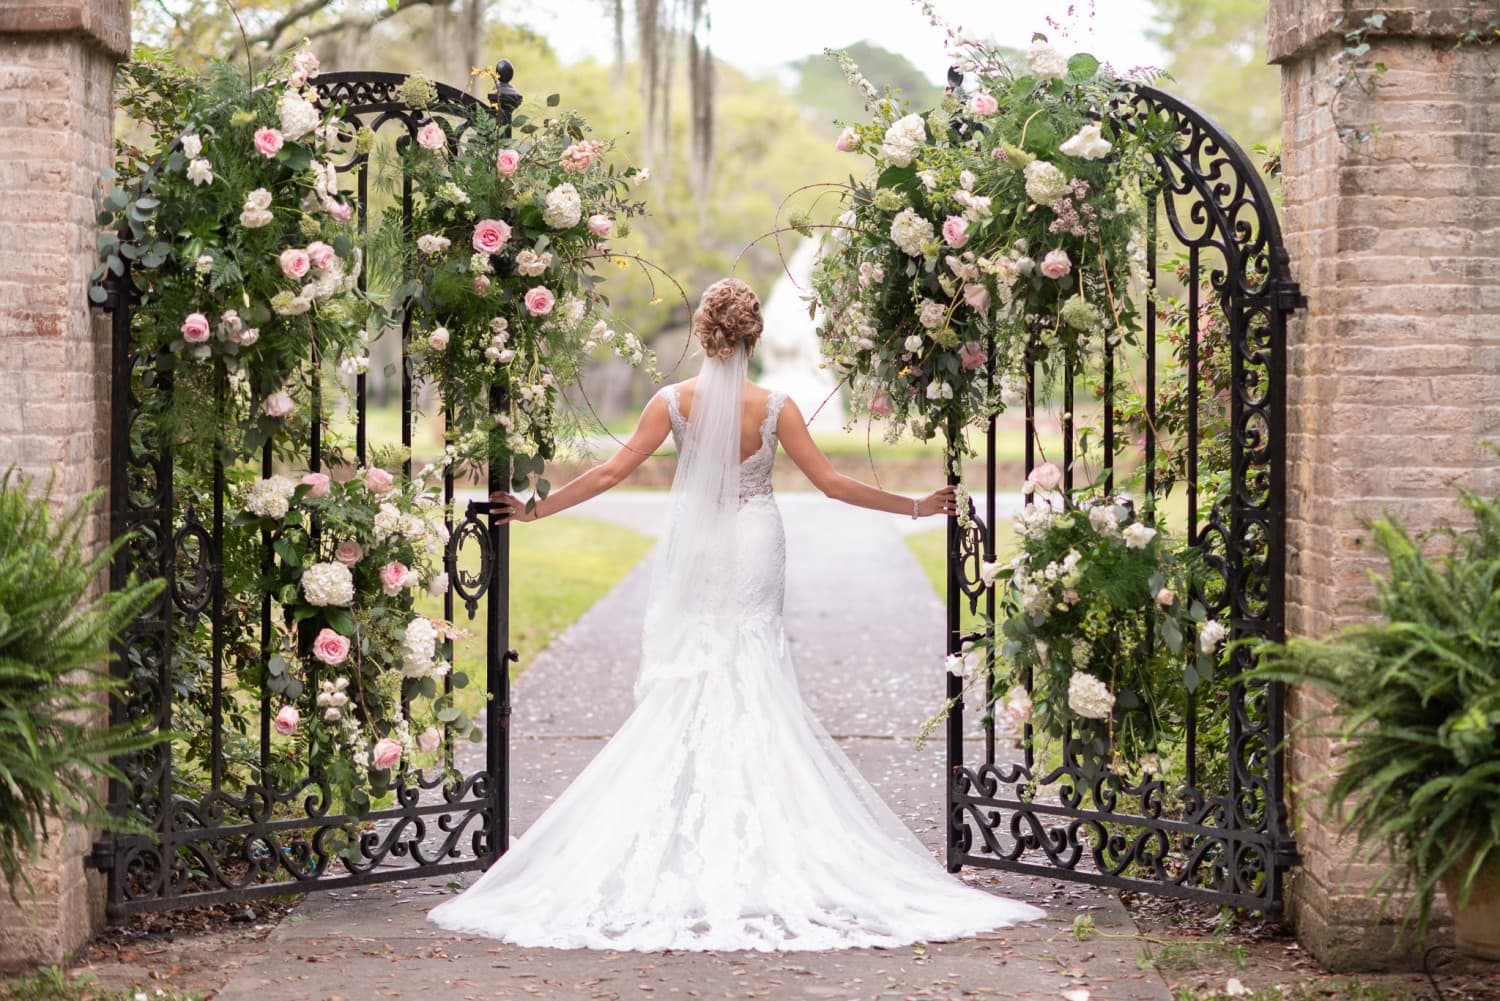 Bride walking through the garden gates - Brookgreen Gardens